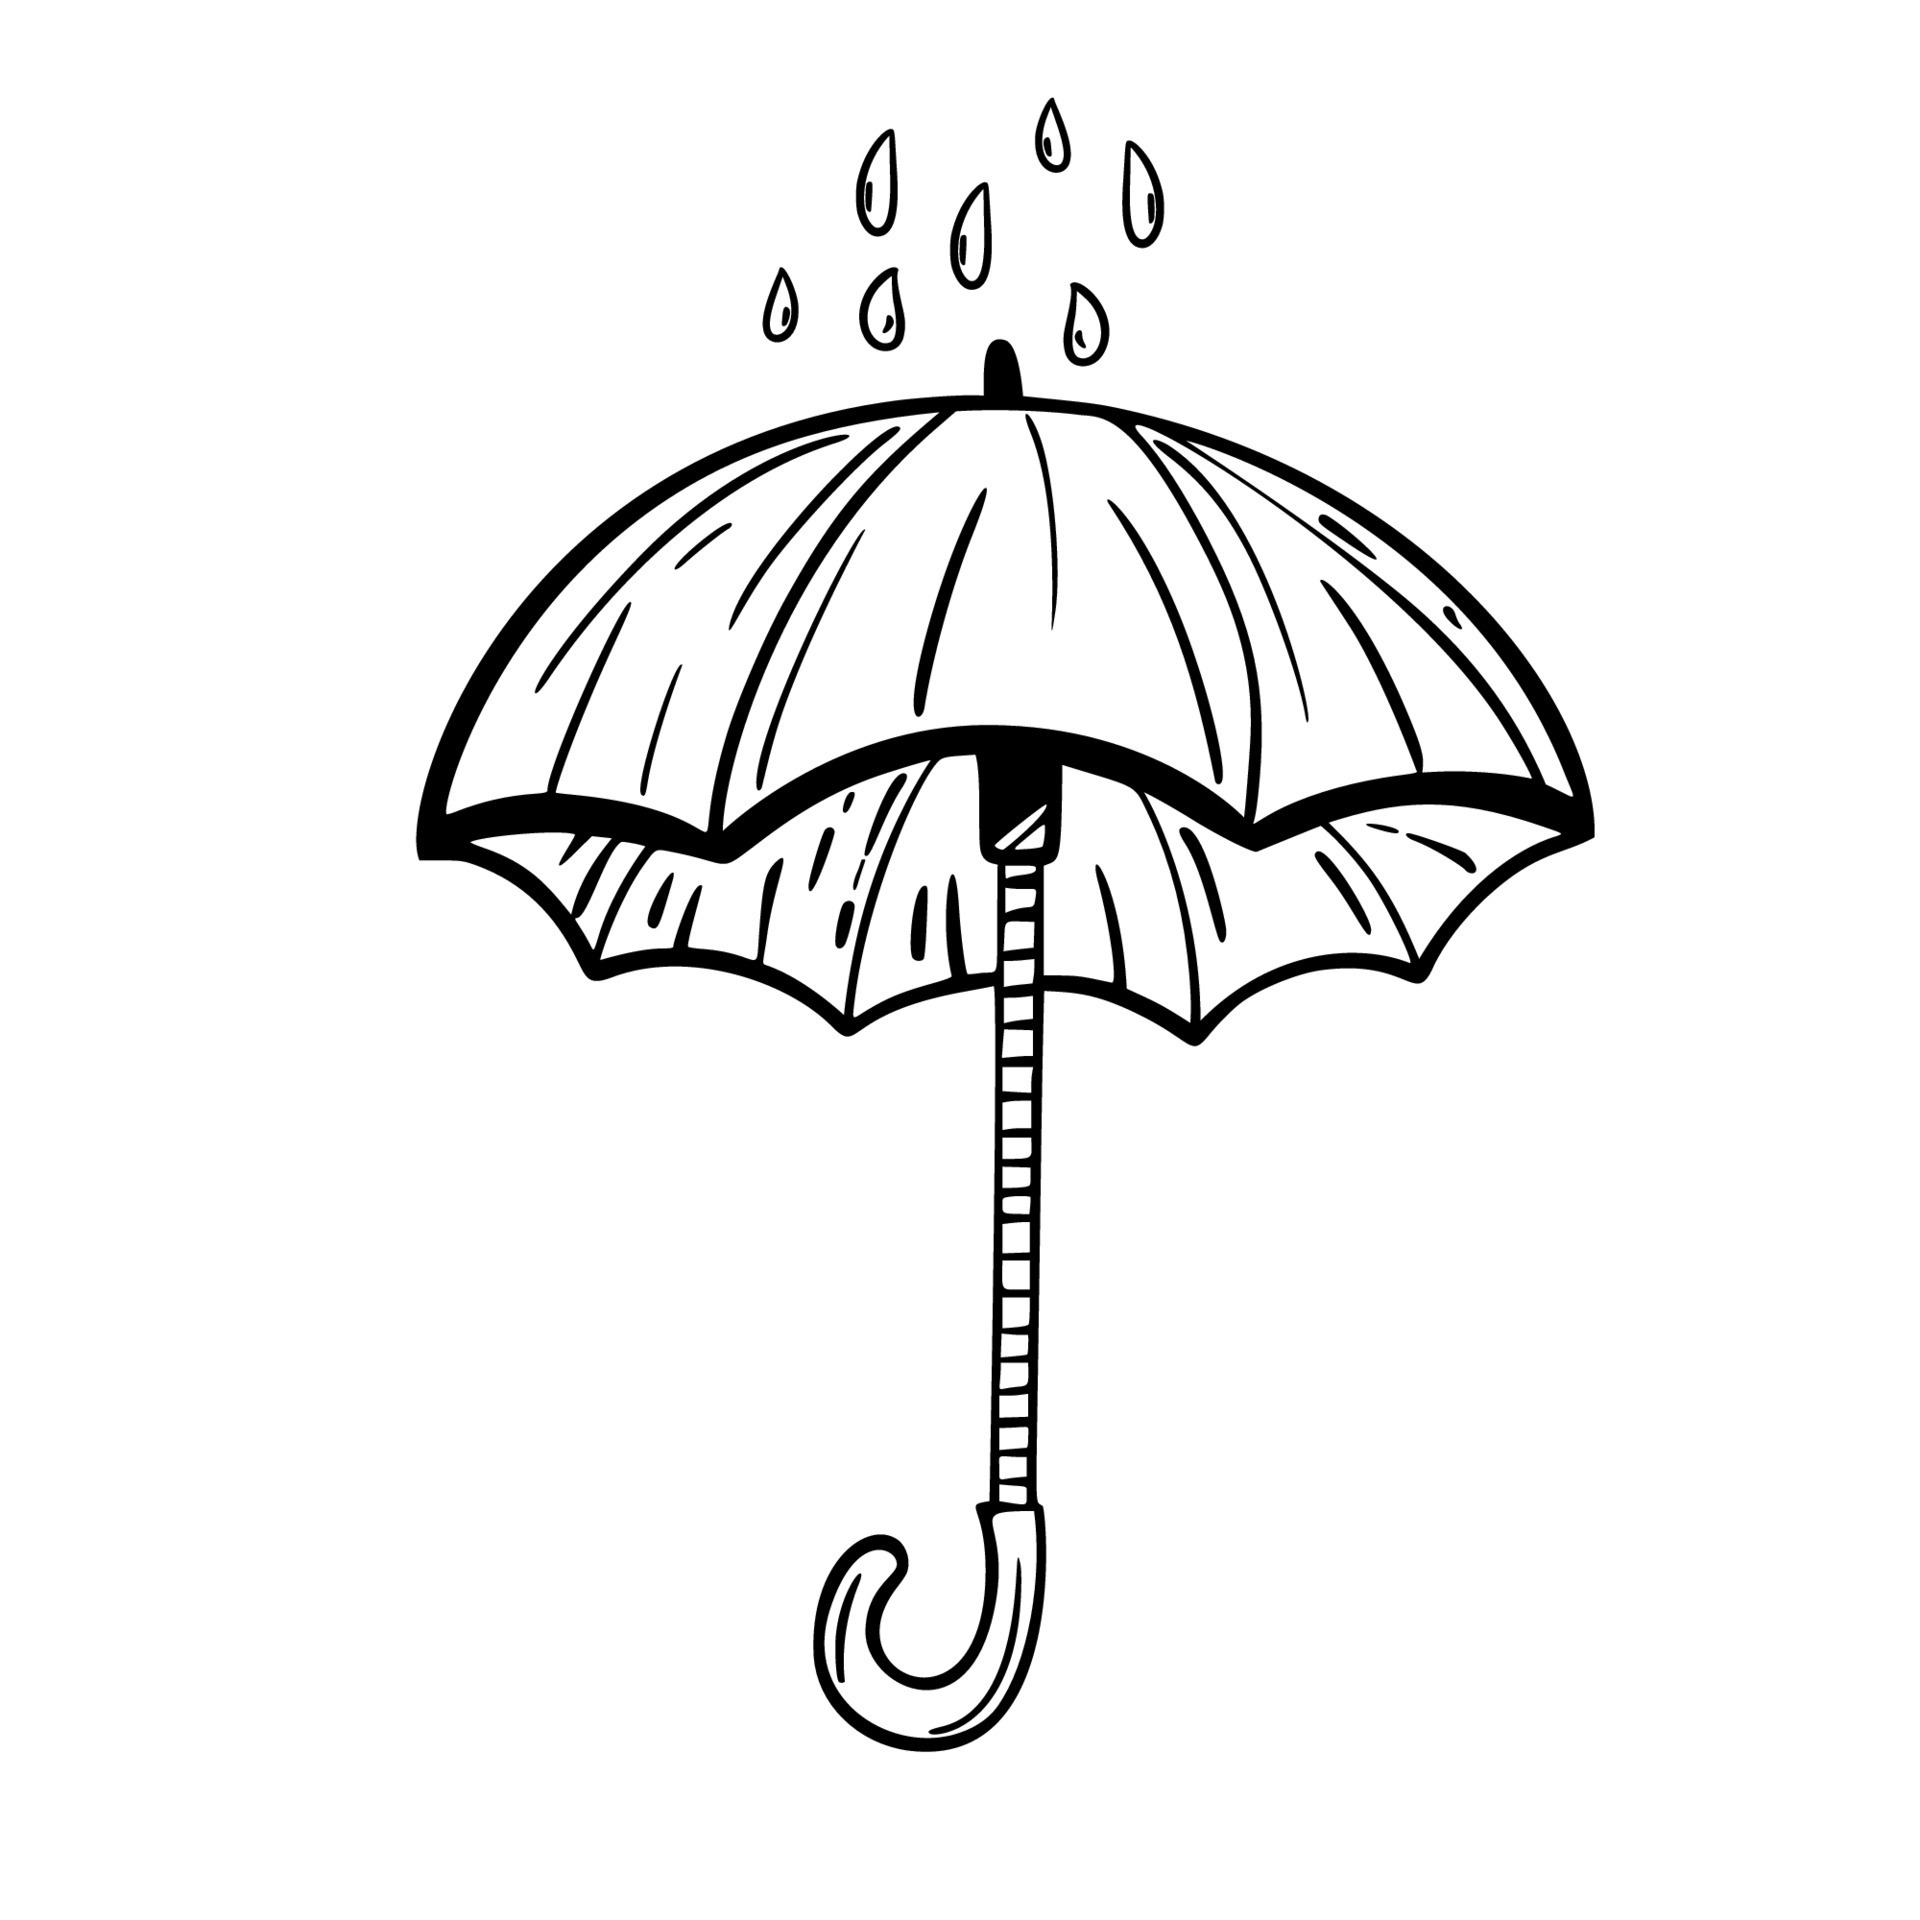 How to draw a rainbow umbrella